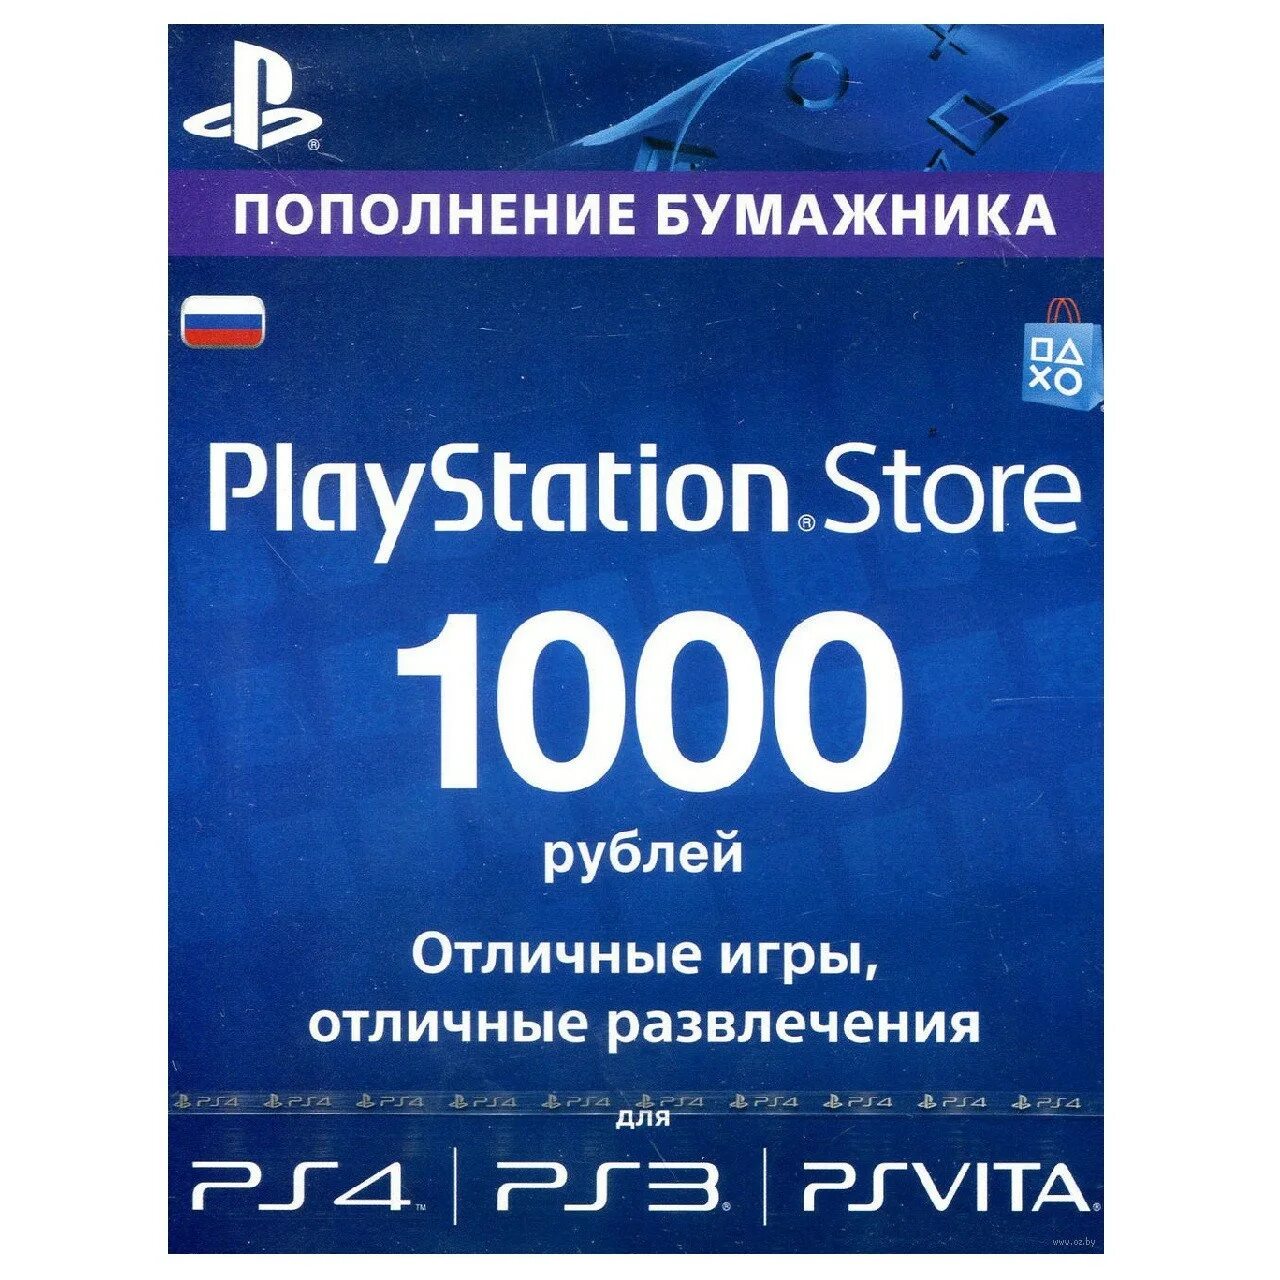 PS 1000 PSN. Карта пополнения PS Store. 1000 Рублей PSN PLAYSTATION Network. Карта оплаты 1000 рублей PLAYSTATION Store.